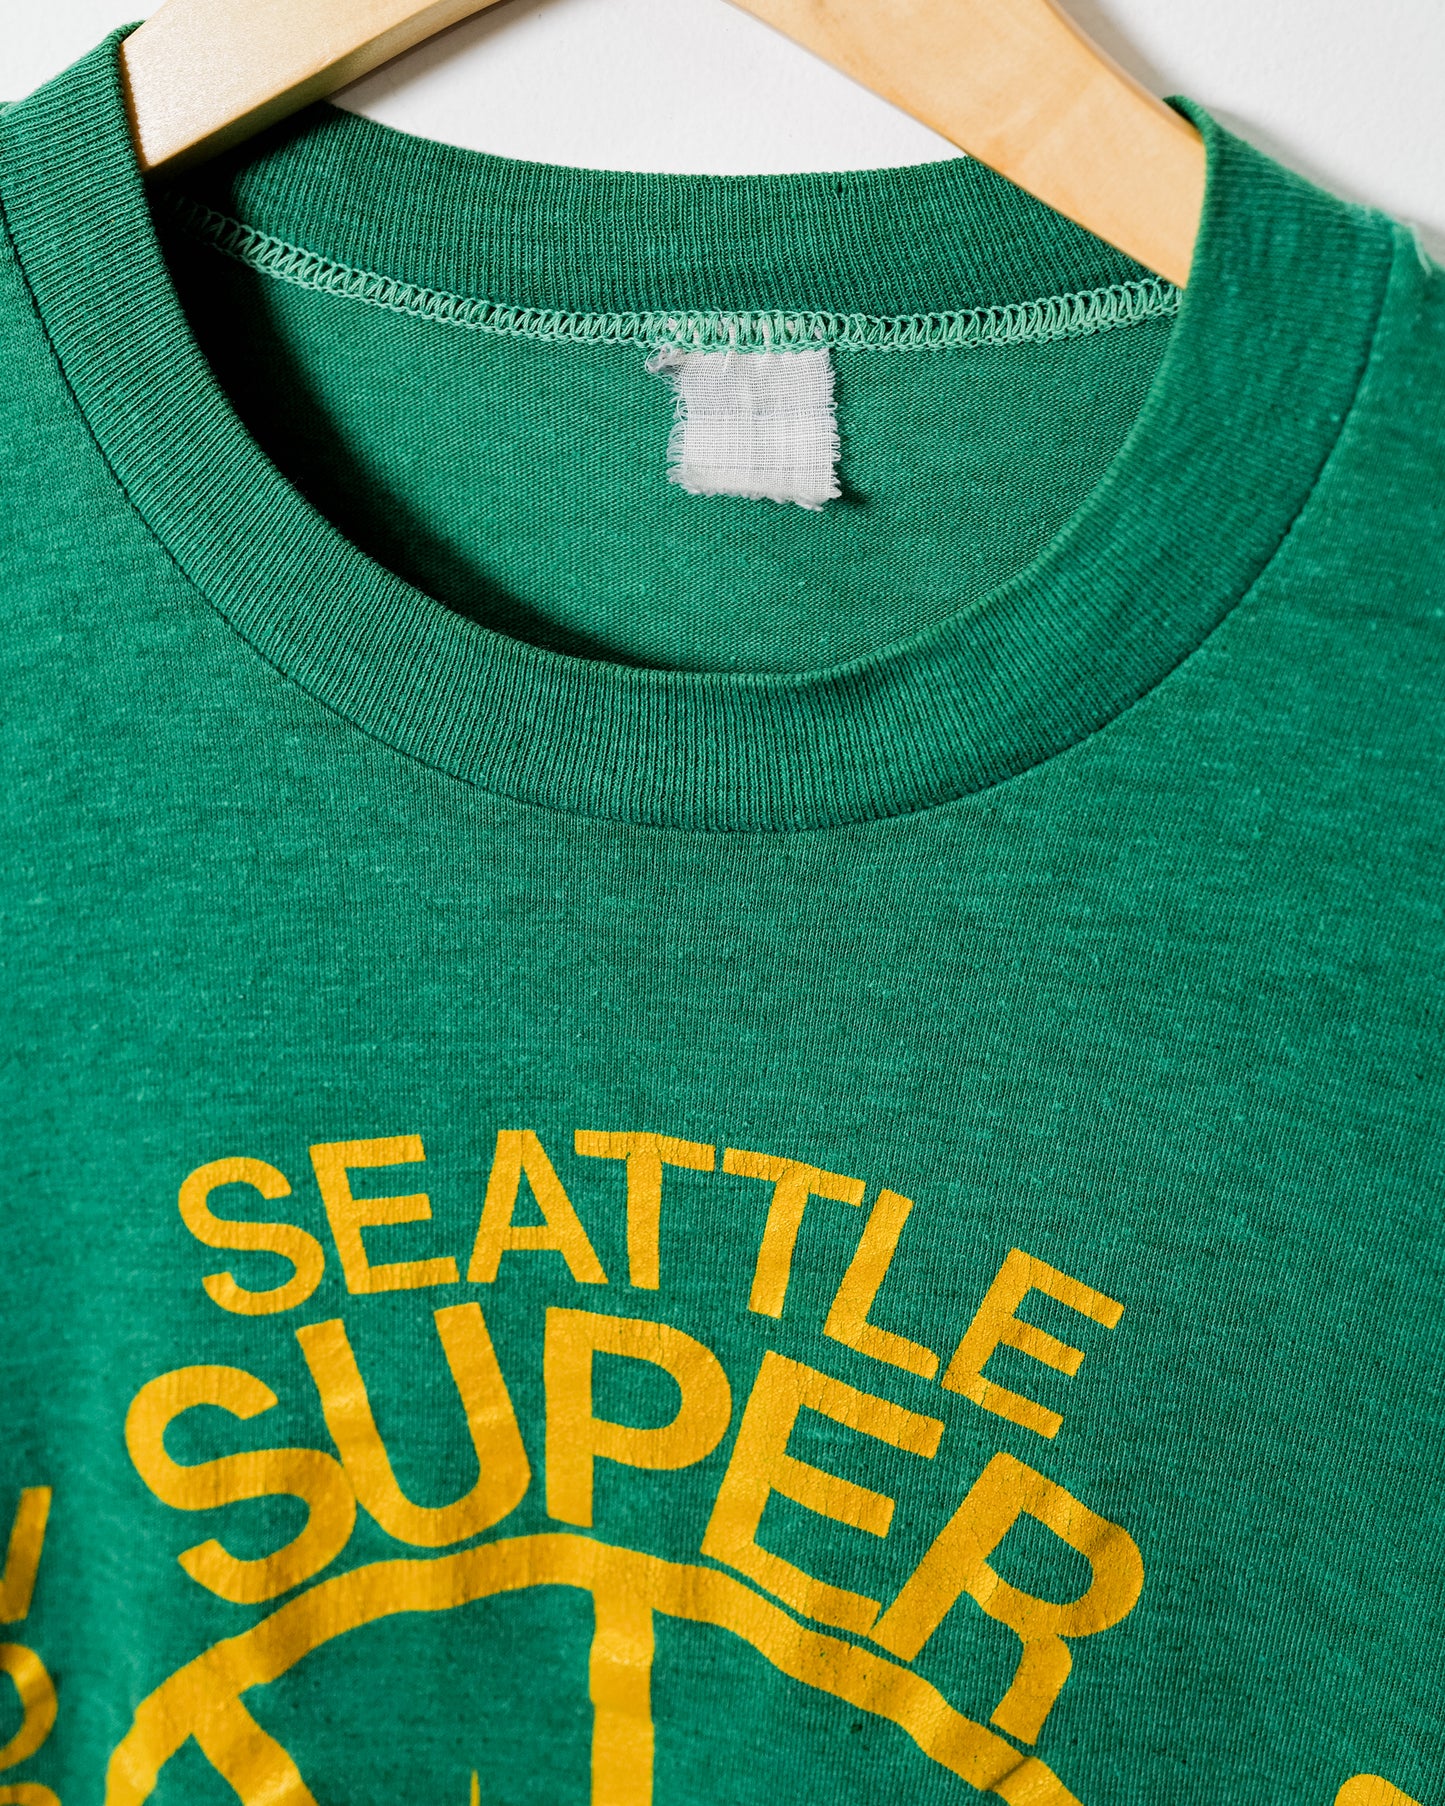 Vintage Seattle Sonics Shirt - Size Small